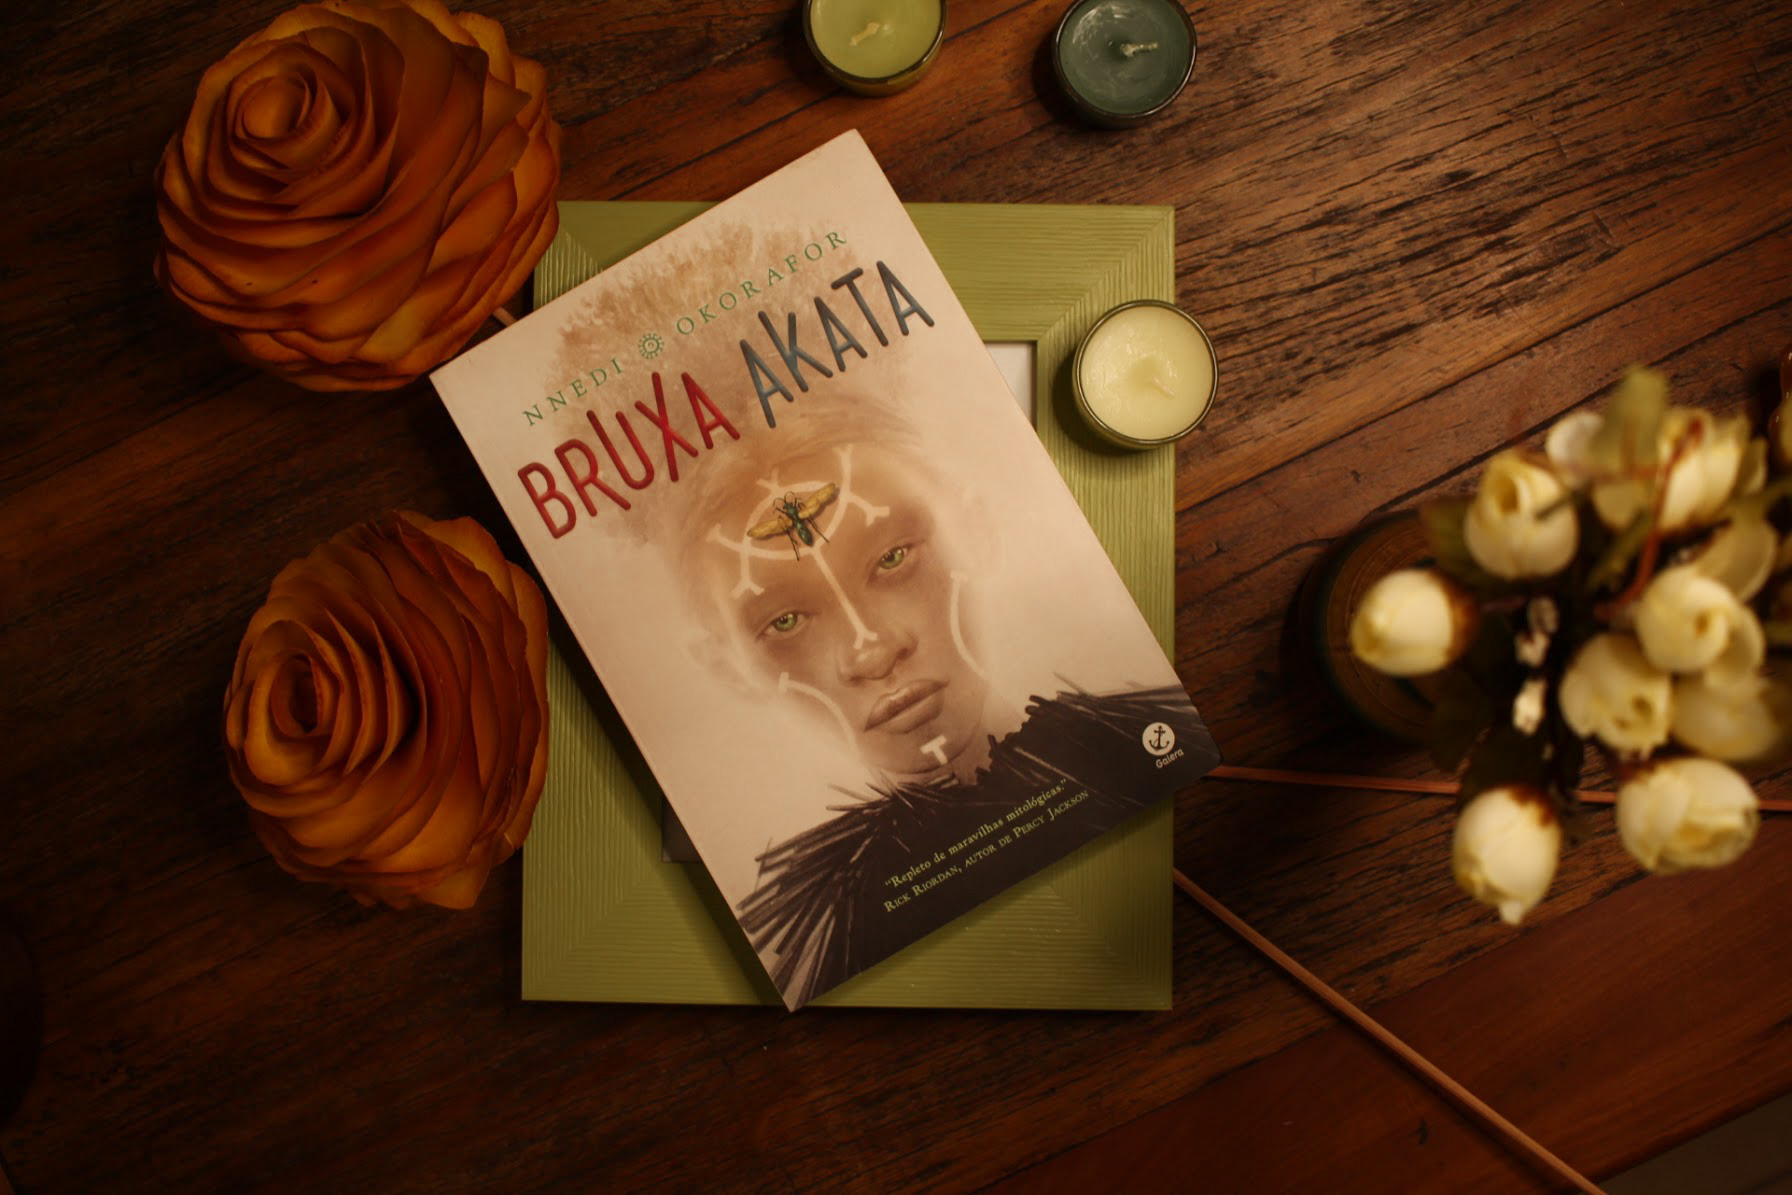 Bruxa Akata - Anatomia Pop